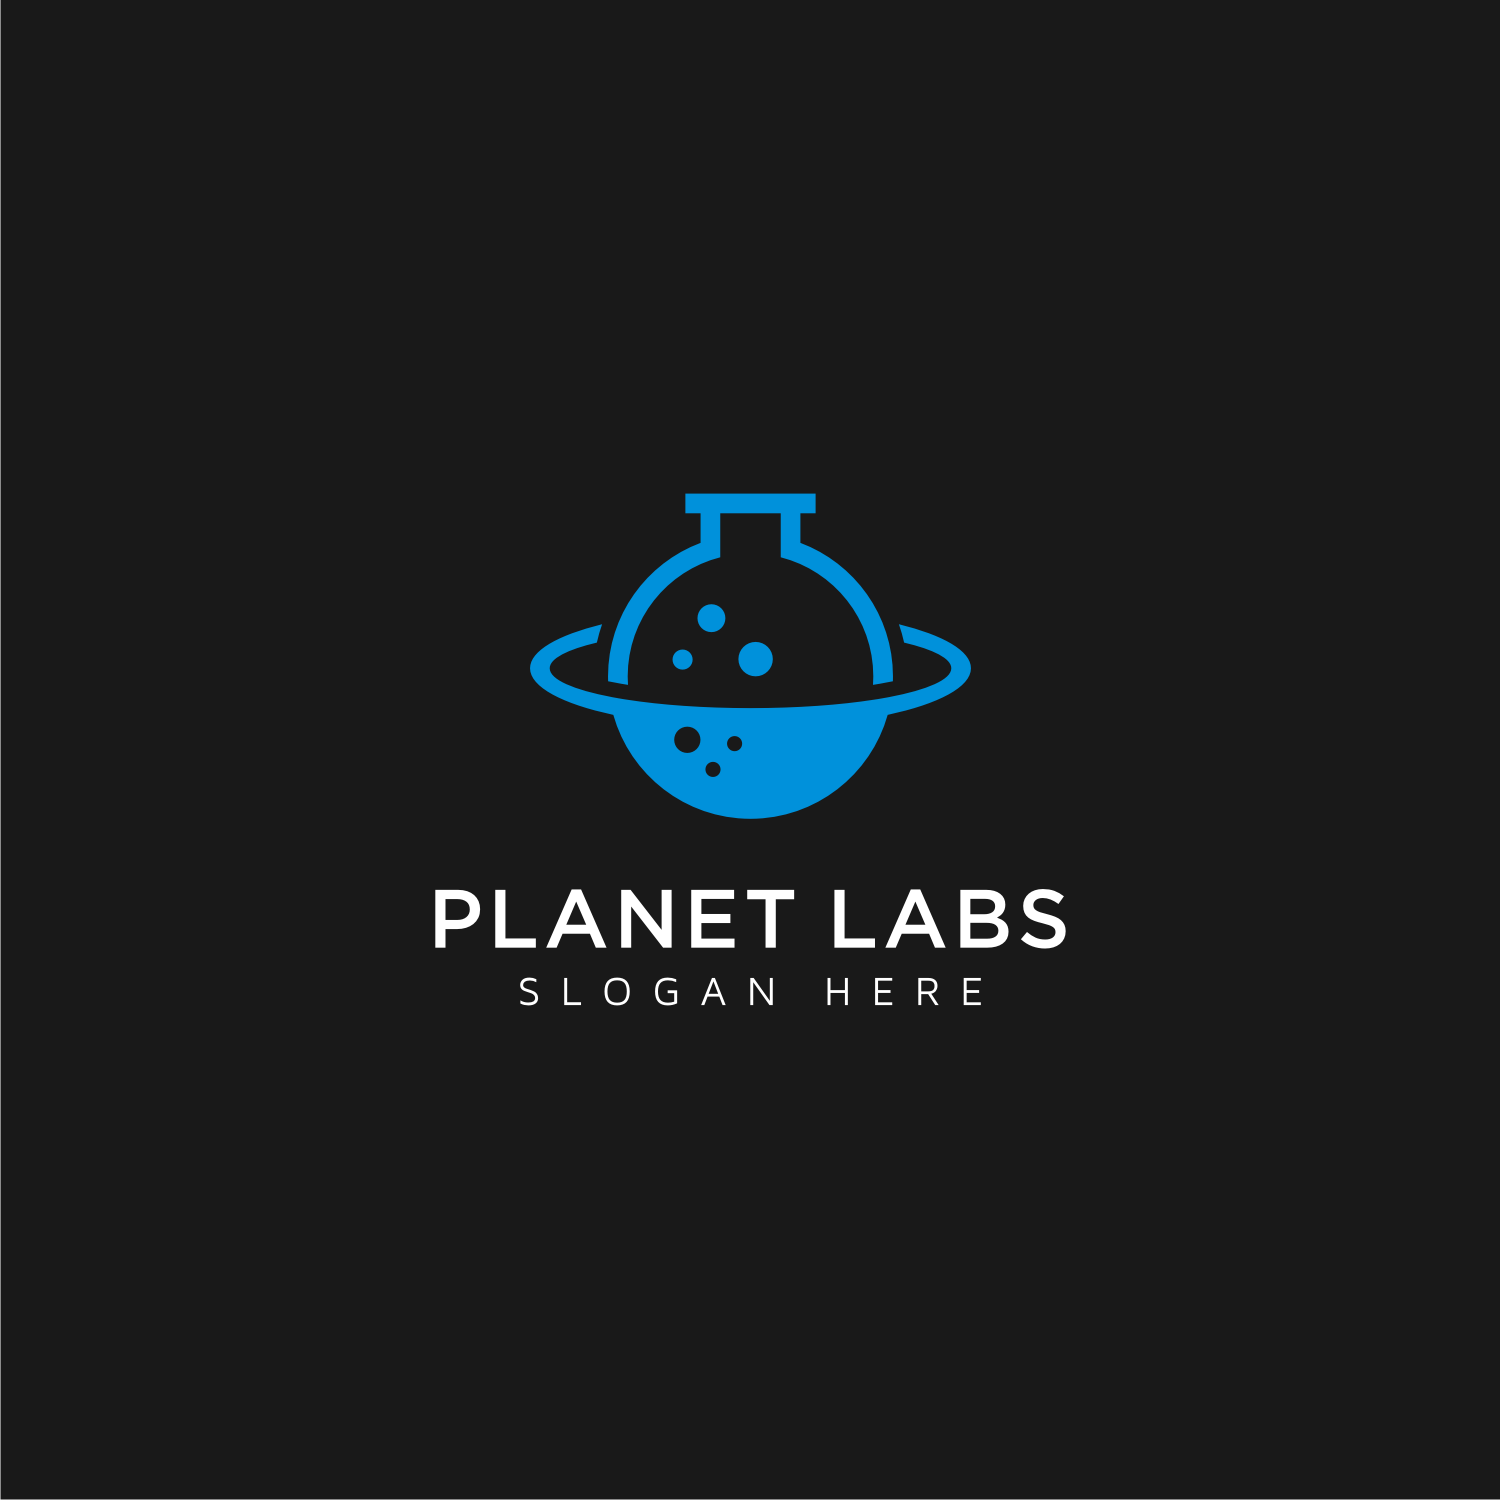 Creative Planet Orbit Labor Lab Abstract Logo Design.